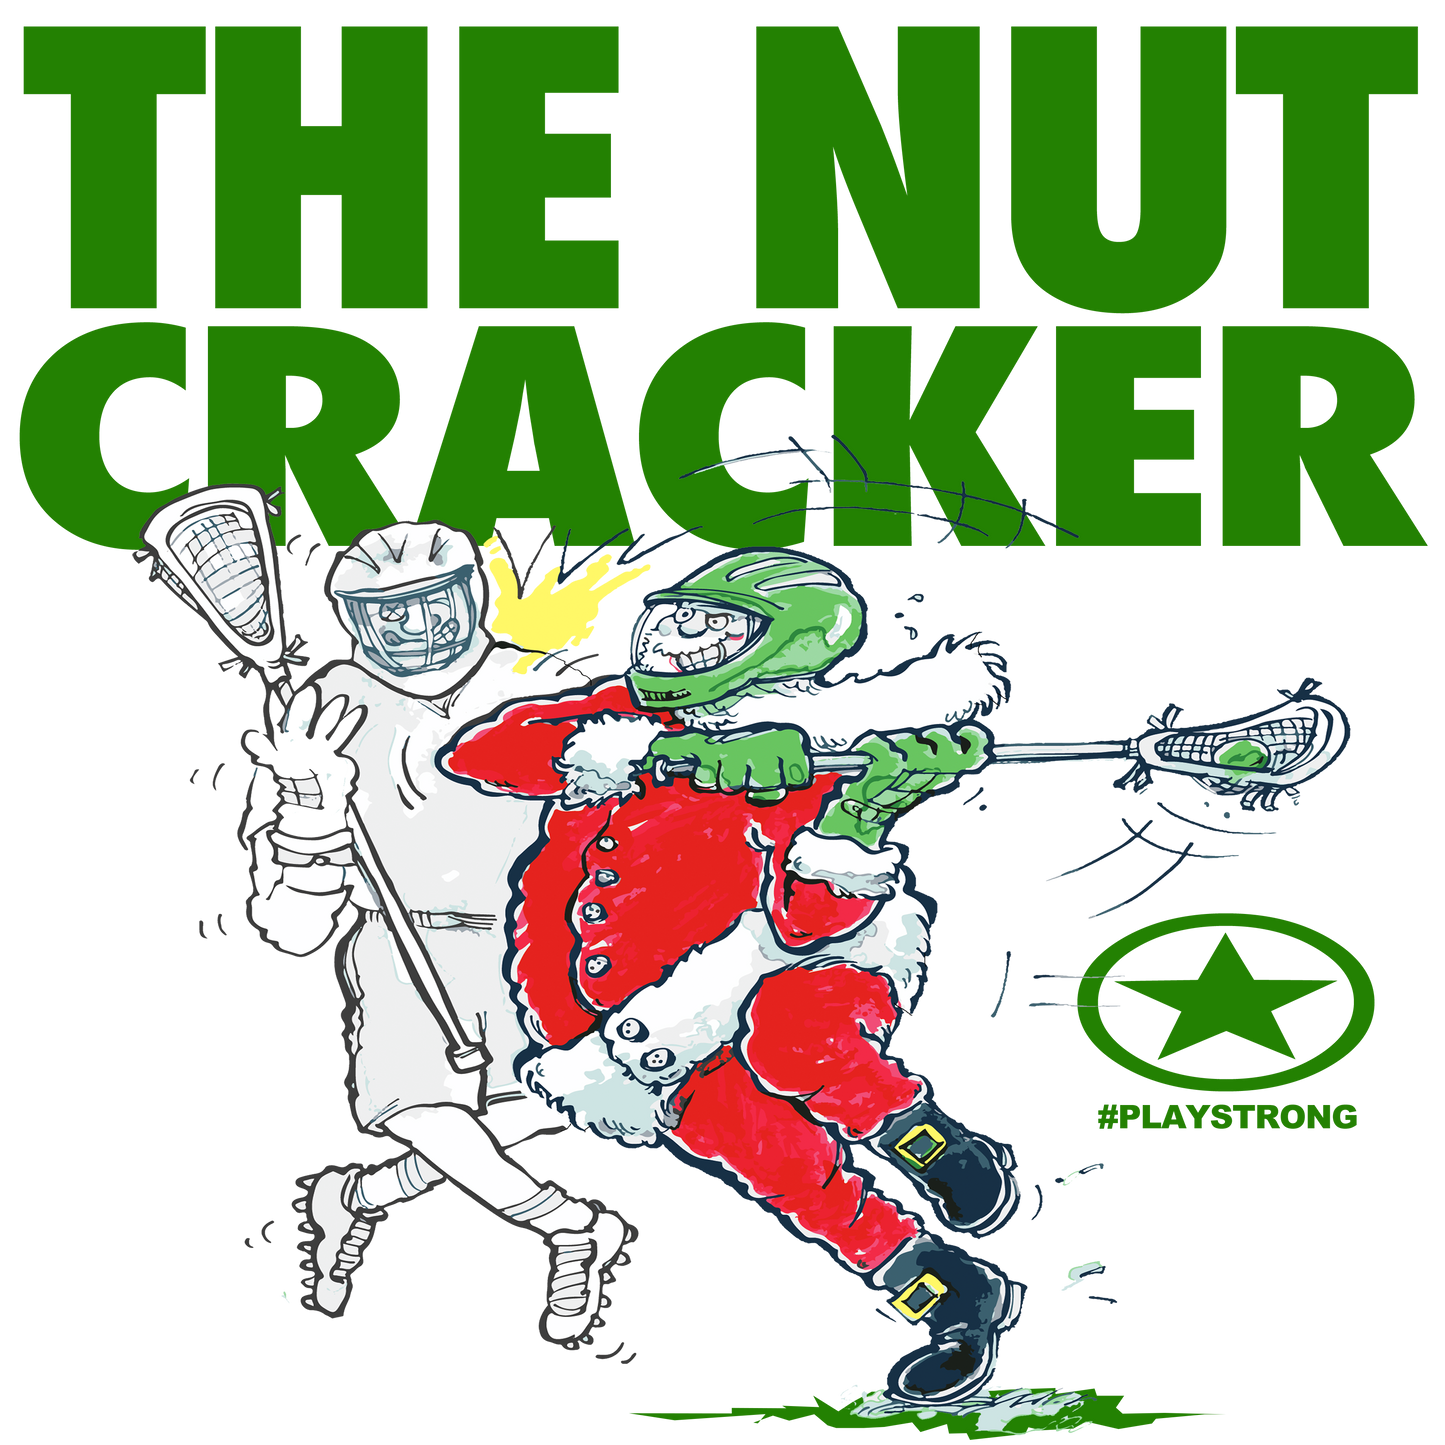 THE NUT CRACKER LACROSSE Santa Sports Mug with Color Inside